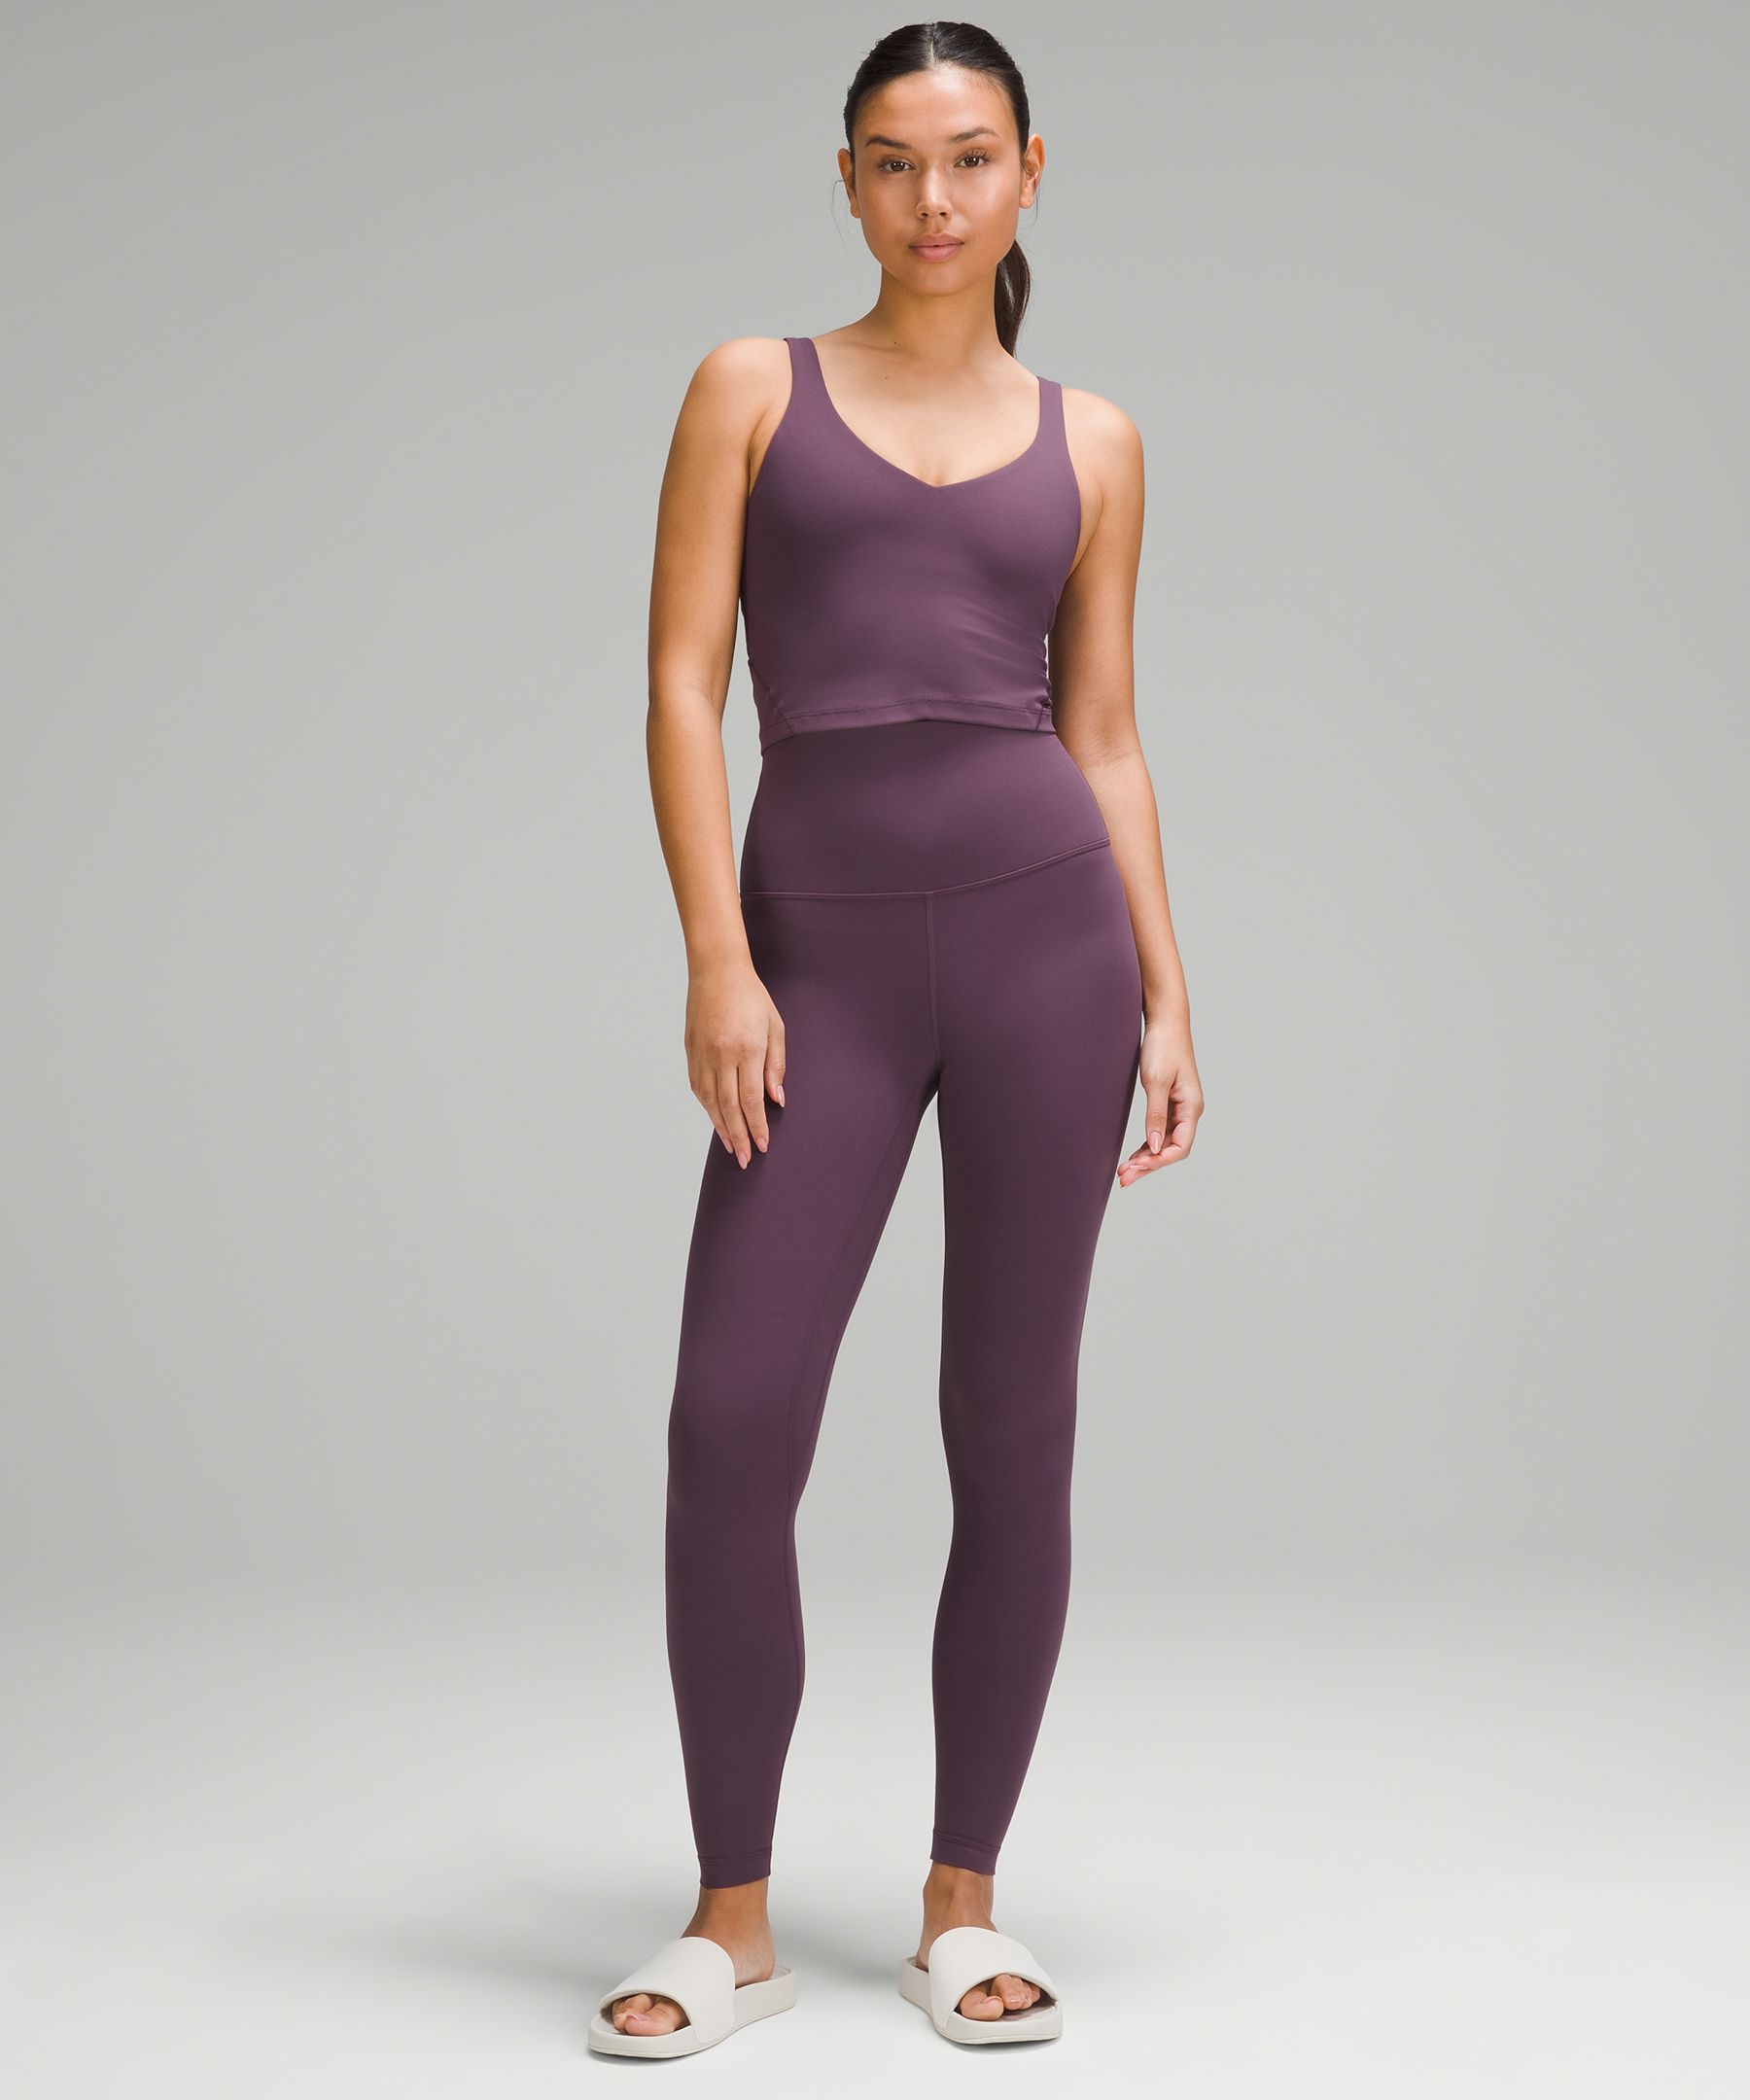 Lululemon Womens 6 Purple Tie Dye Criss Cross Align Legging Yoga